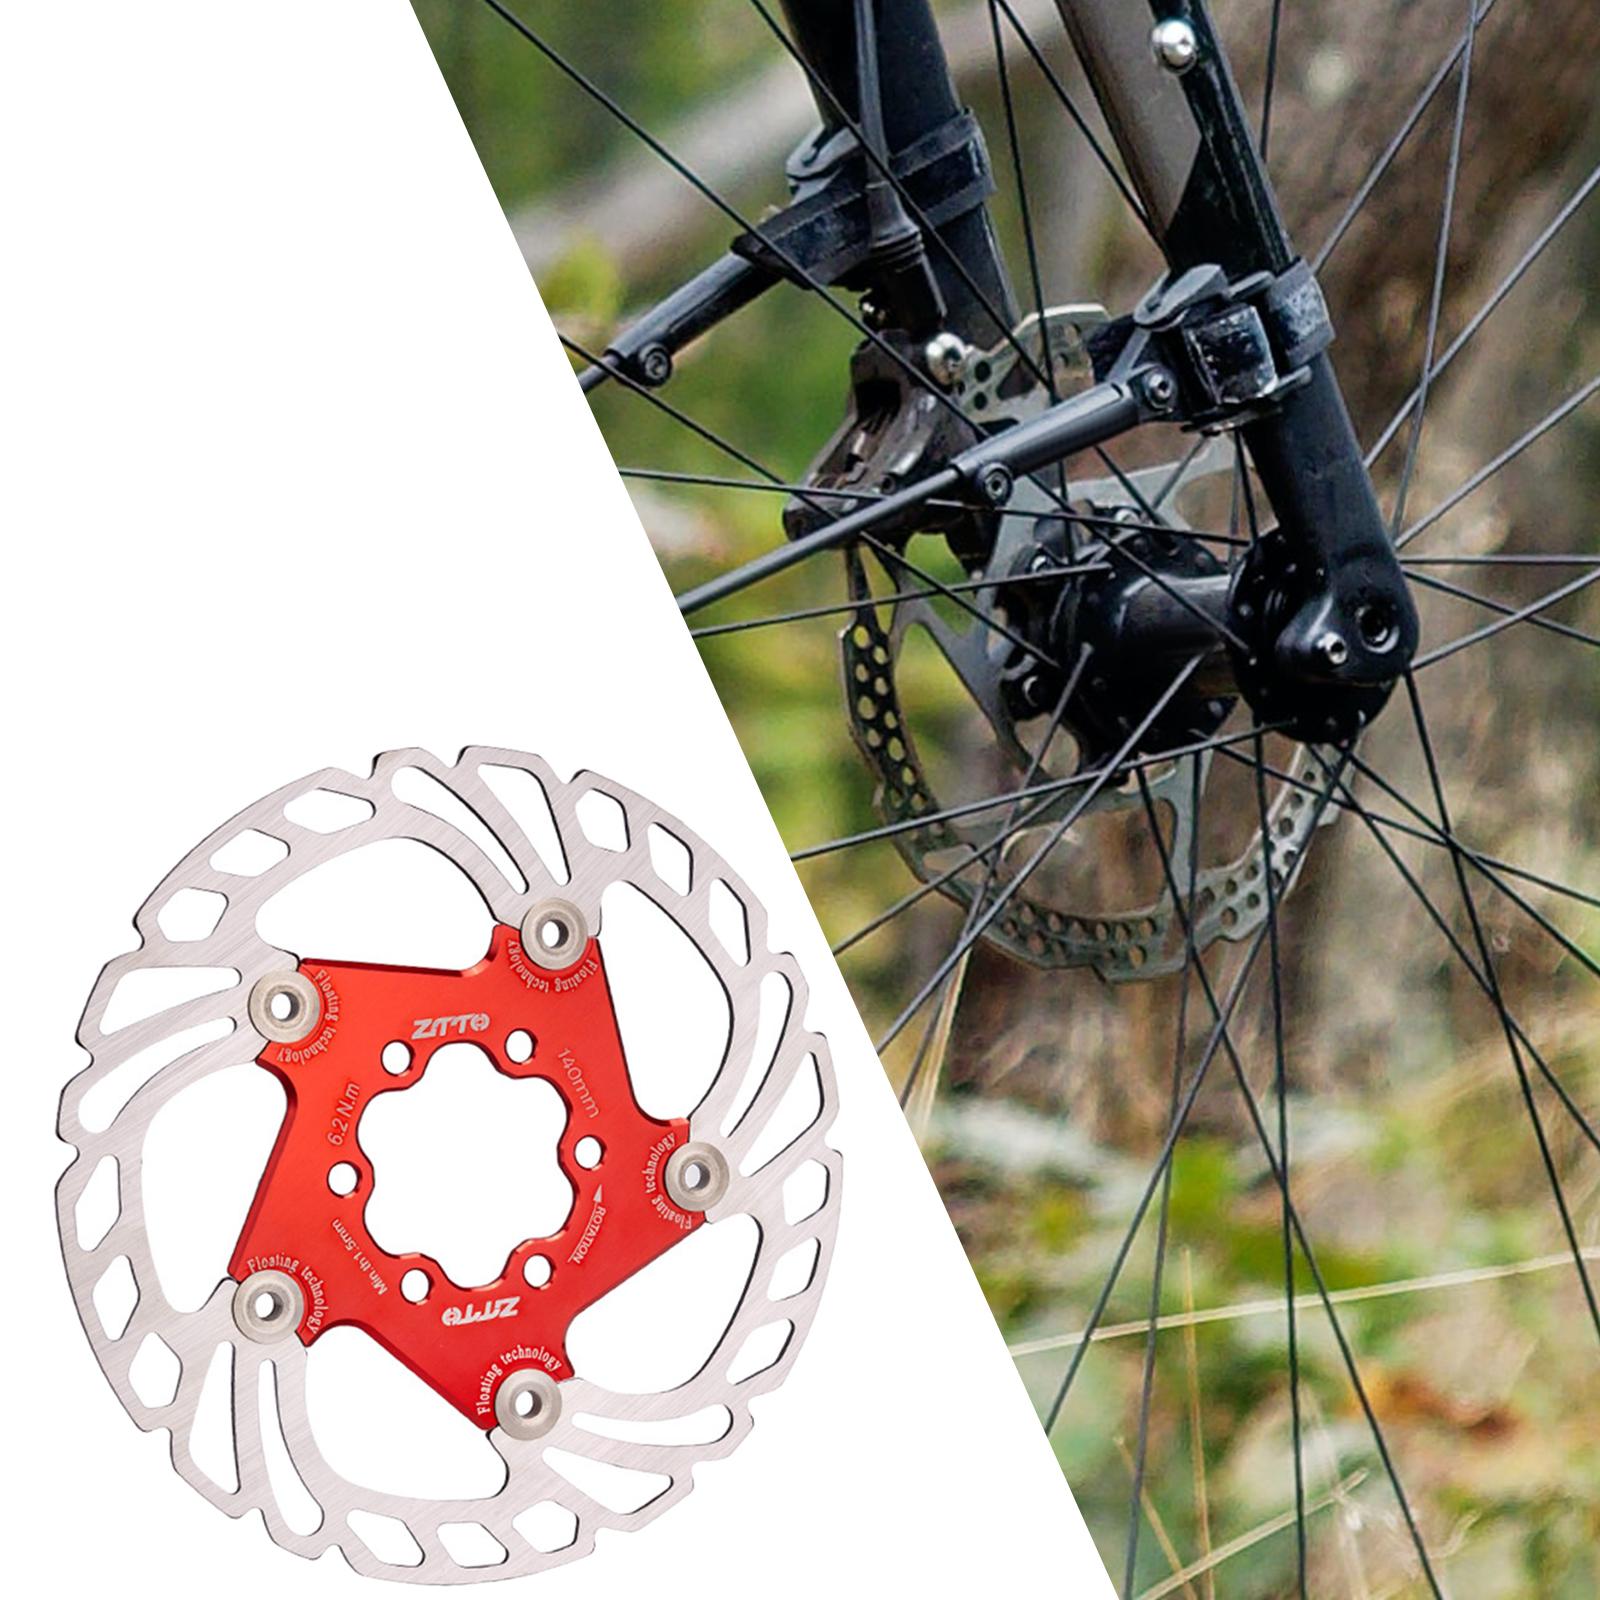 Bike Disc Brake Rotor Bicycle Brake Disc for MTB Road Bikes Red 140mm